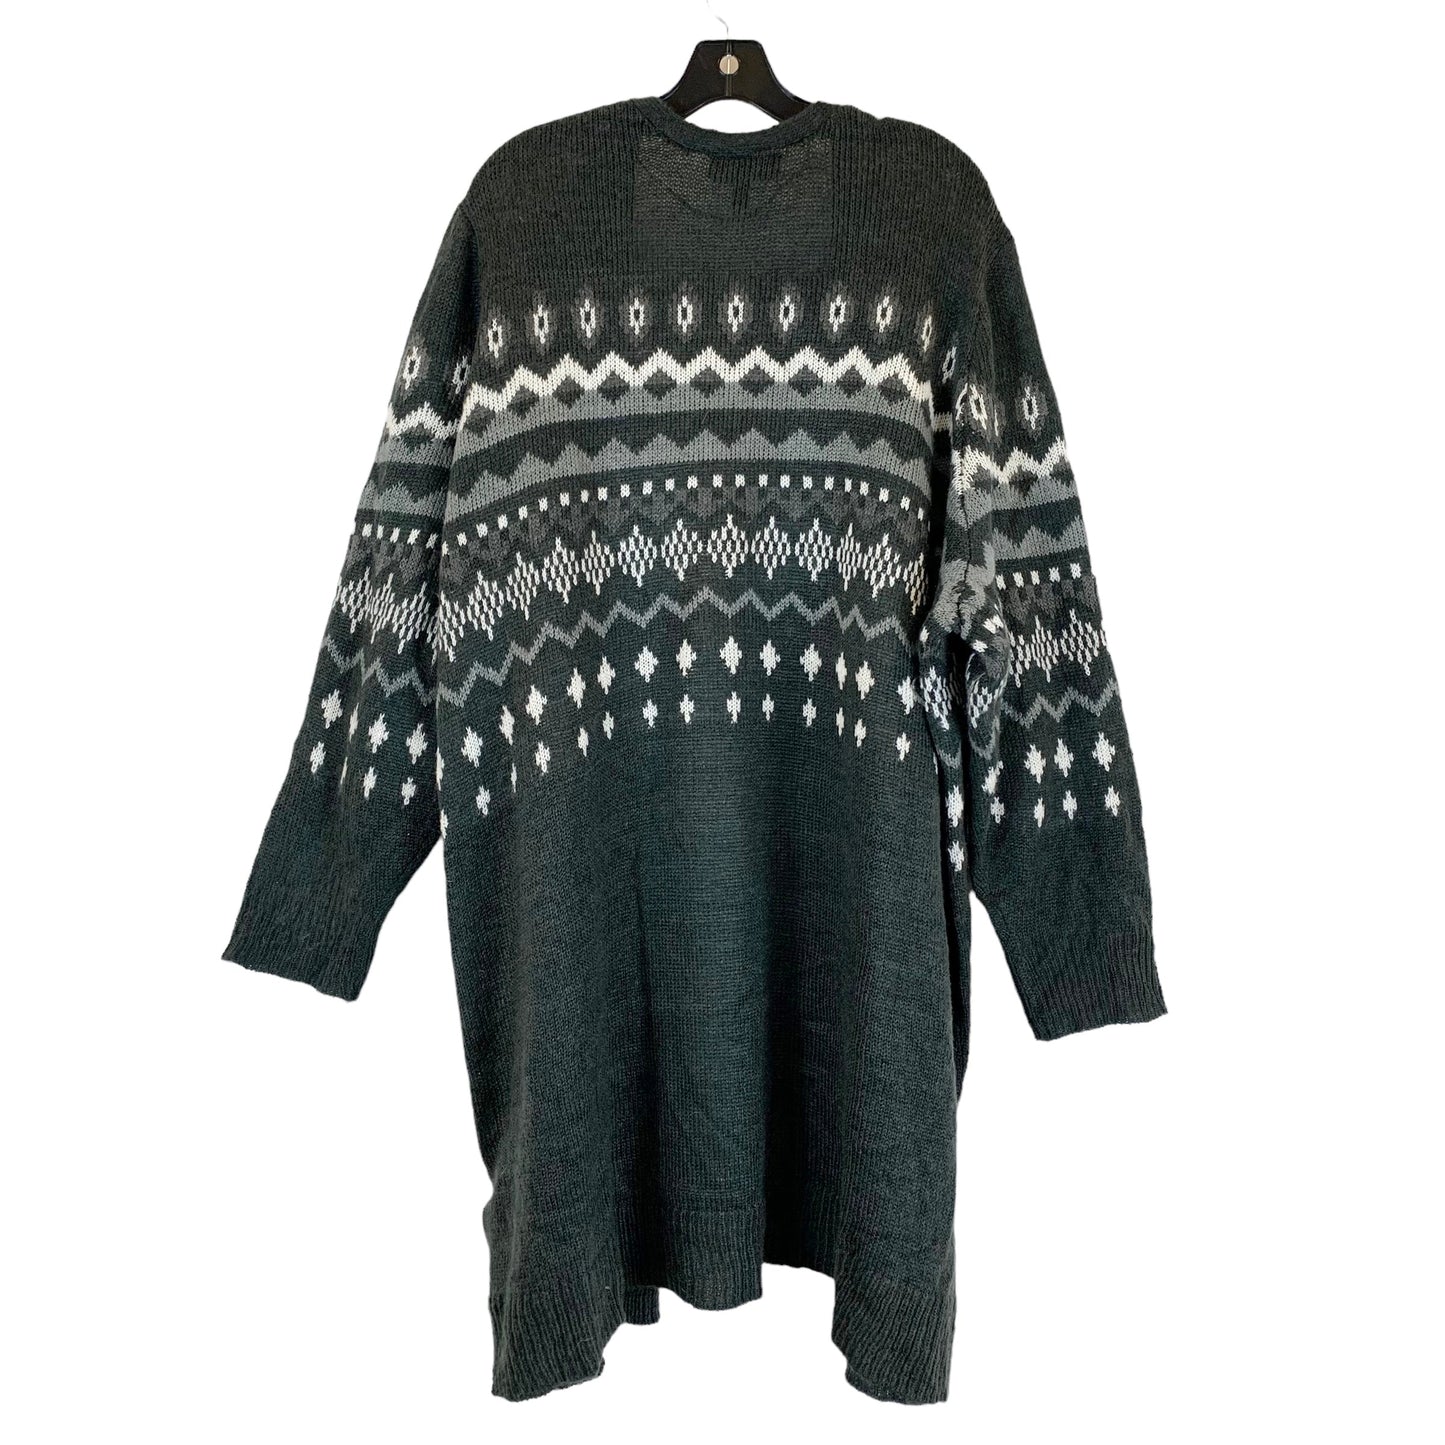 Sweater Cardigan By Lane Bryant  Size: 4x